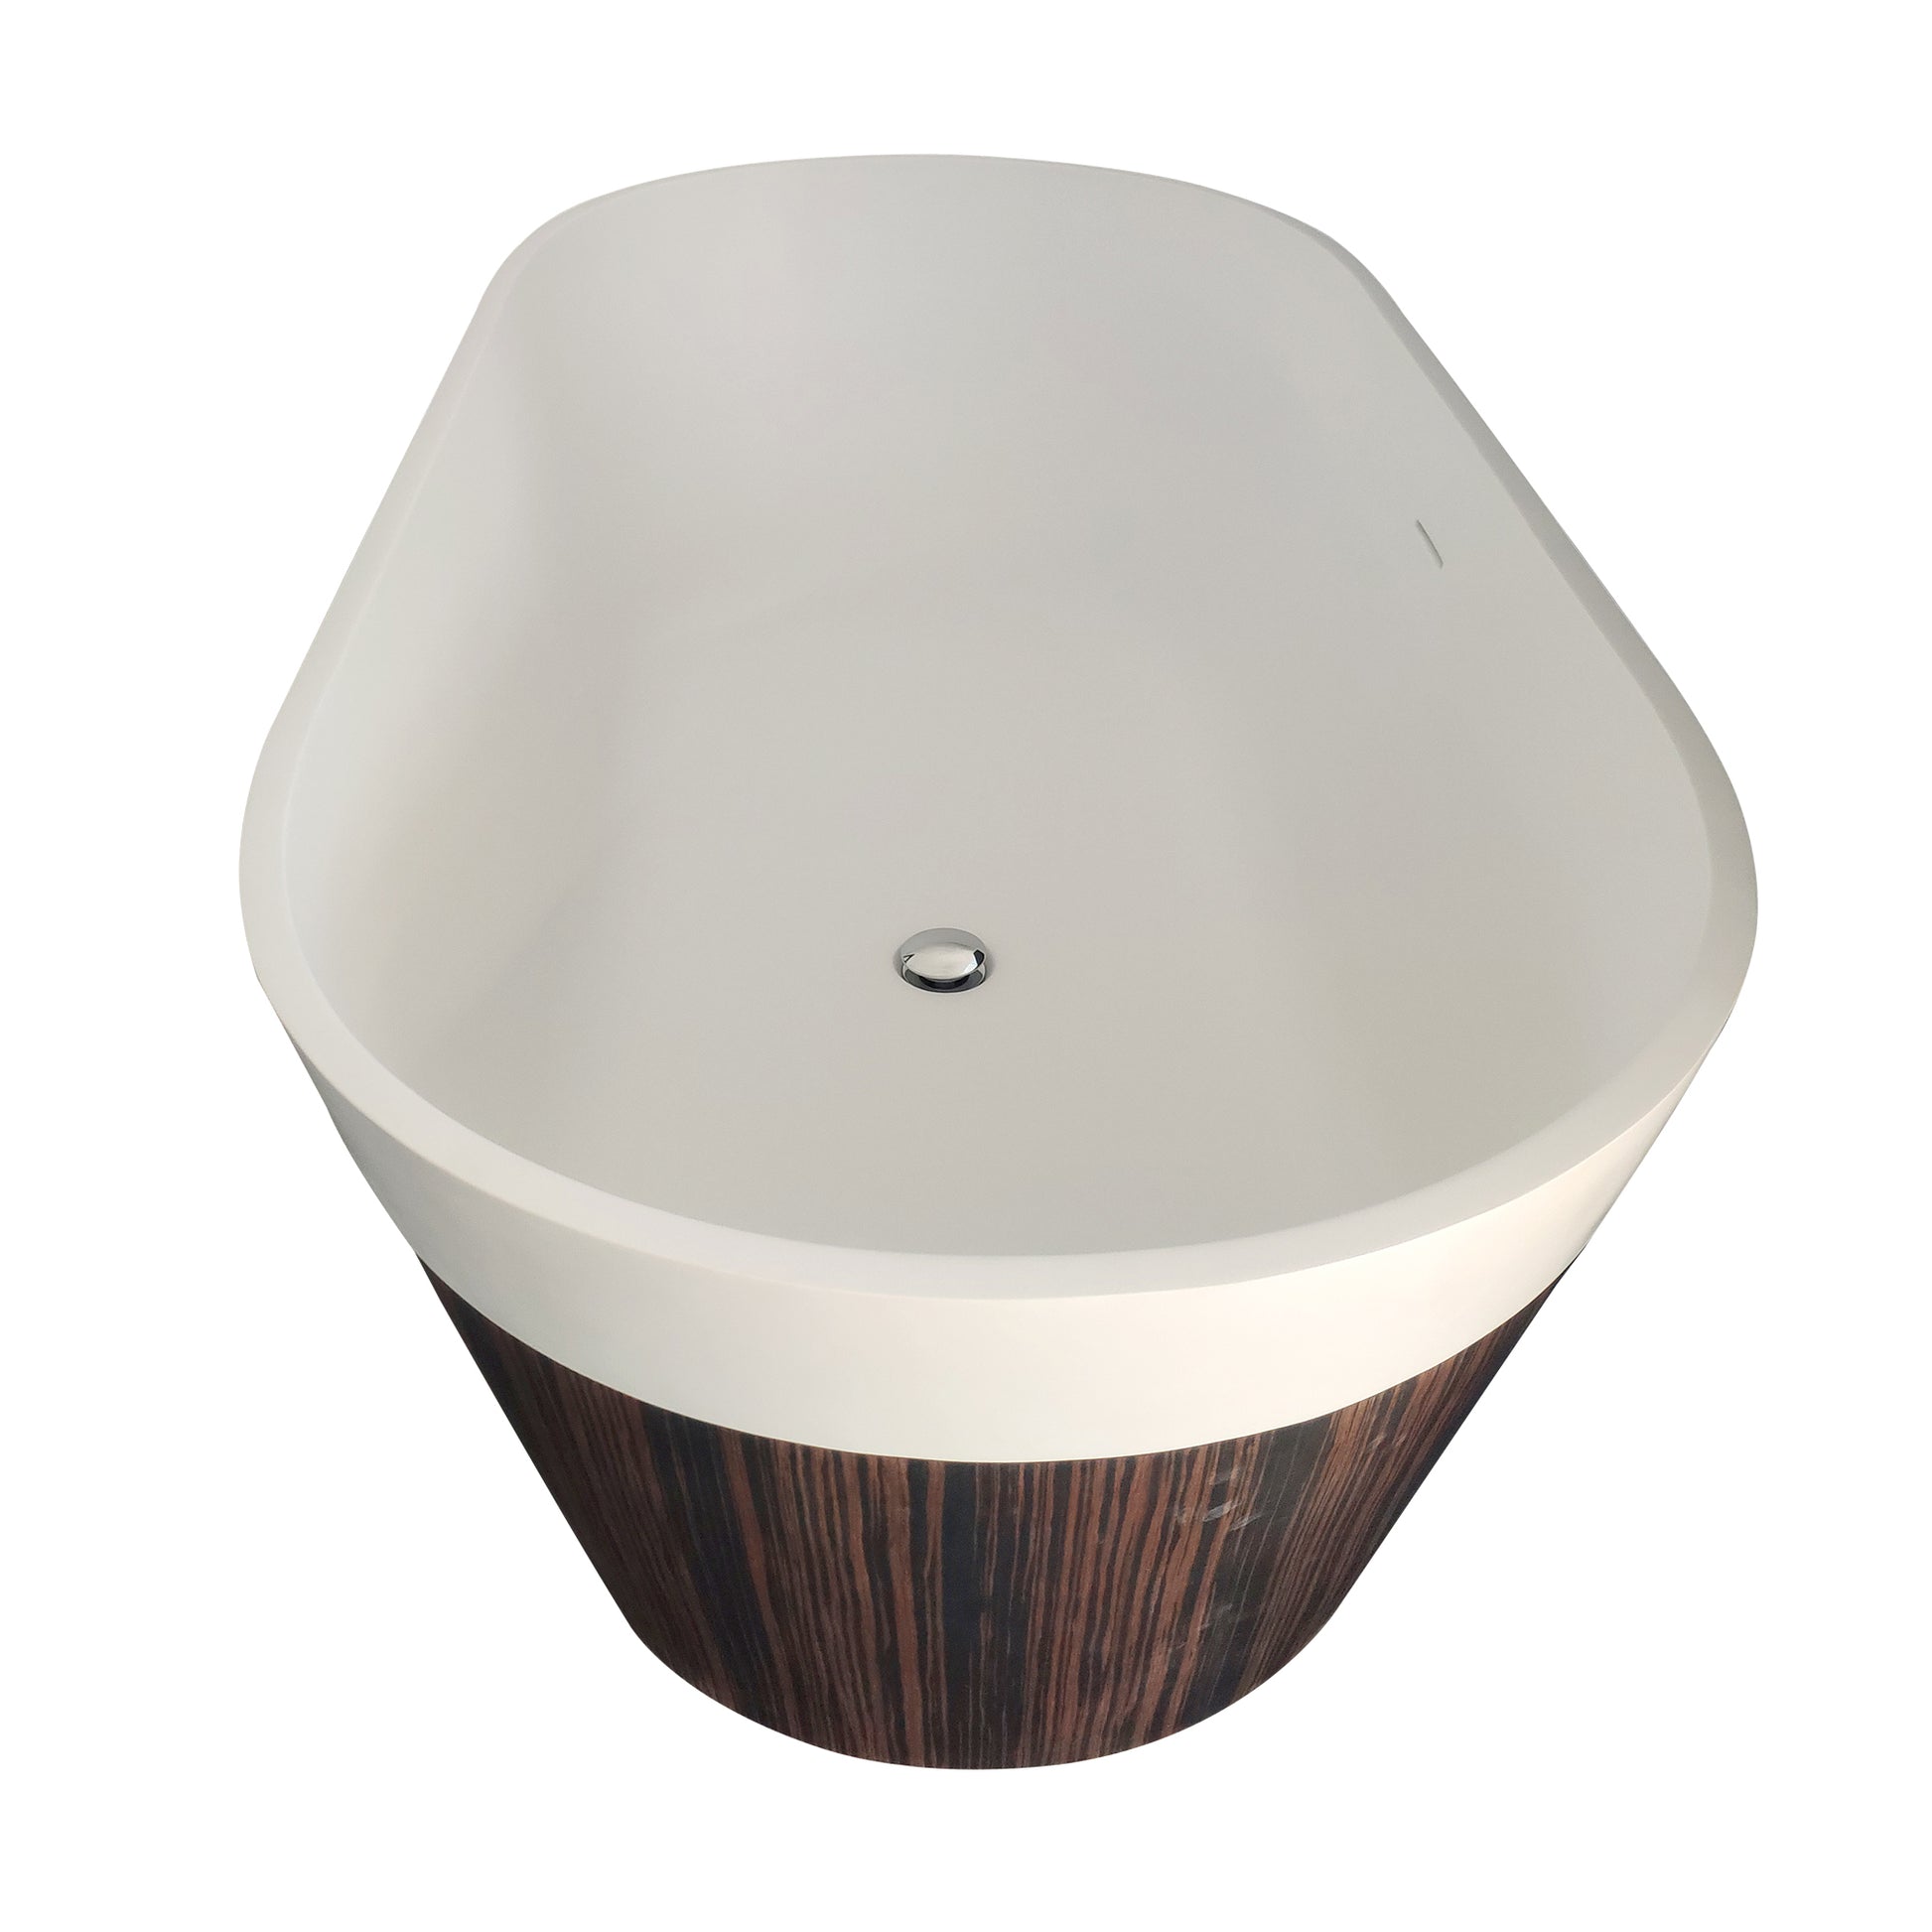 63"Wood Grain Solid Surface Bathtub For Bathroom